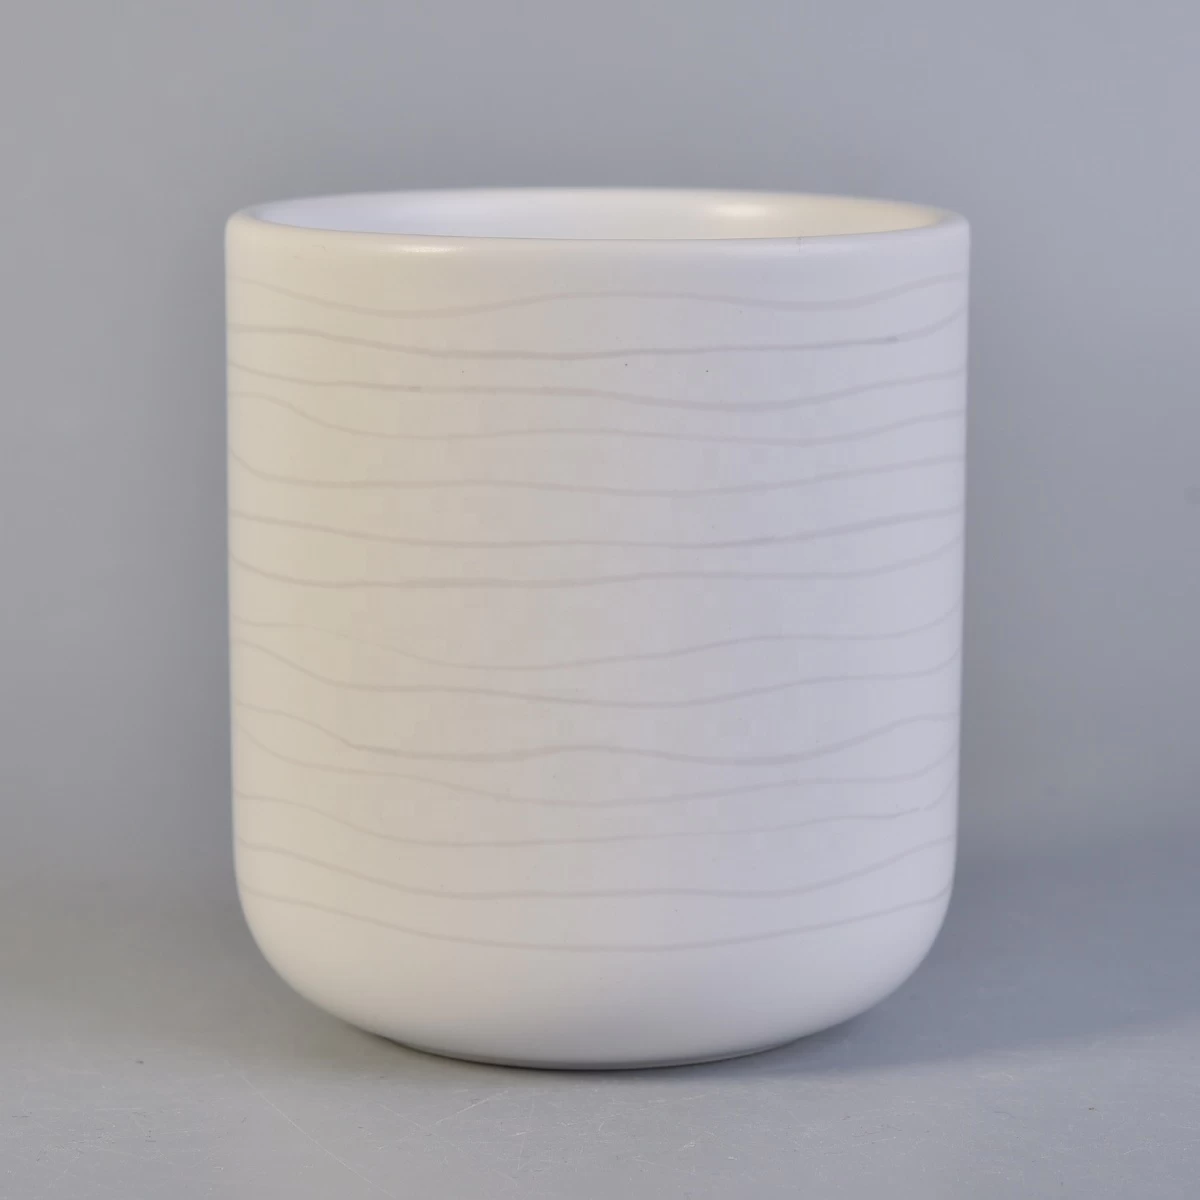 Sunny hot sales Custom white decorative candle ceramic holders jar